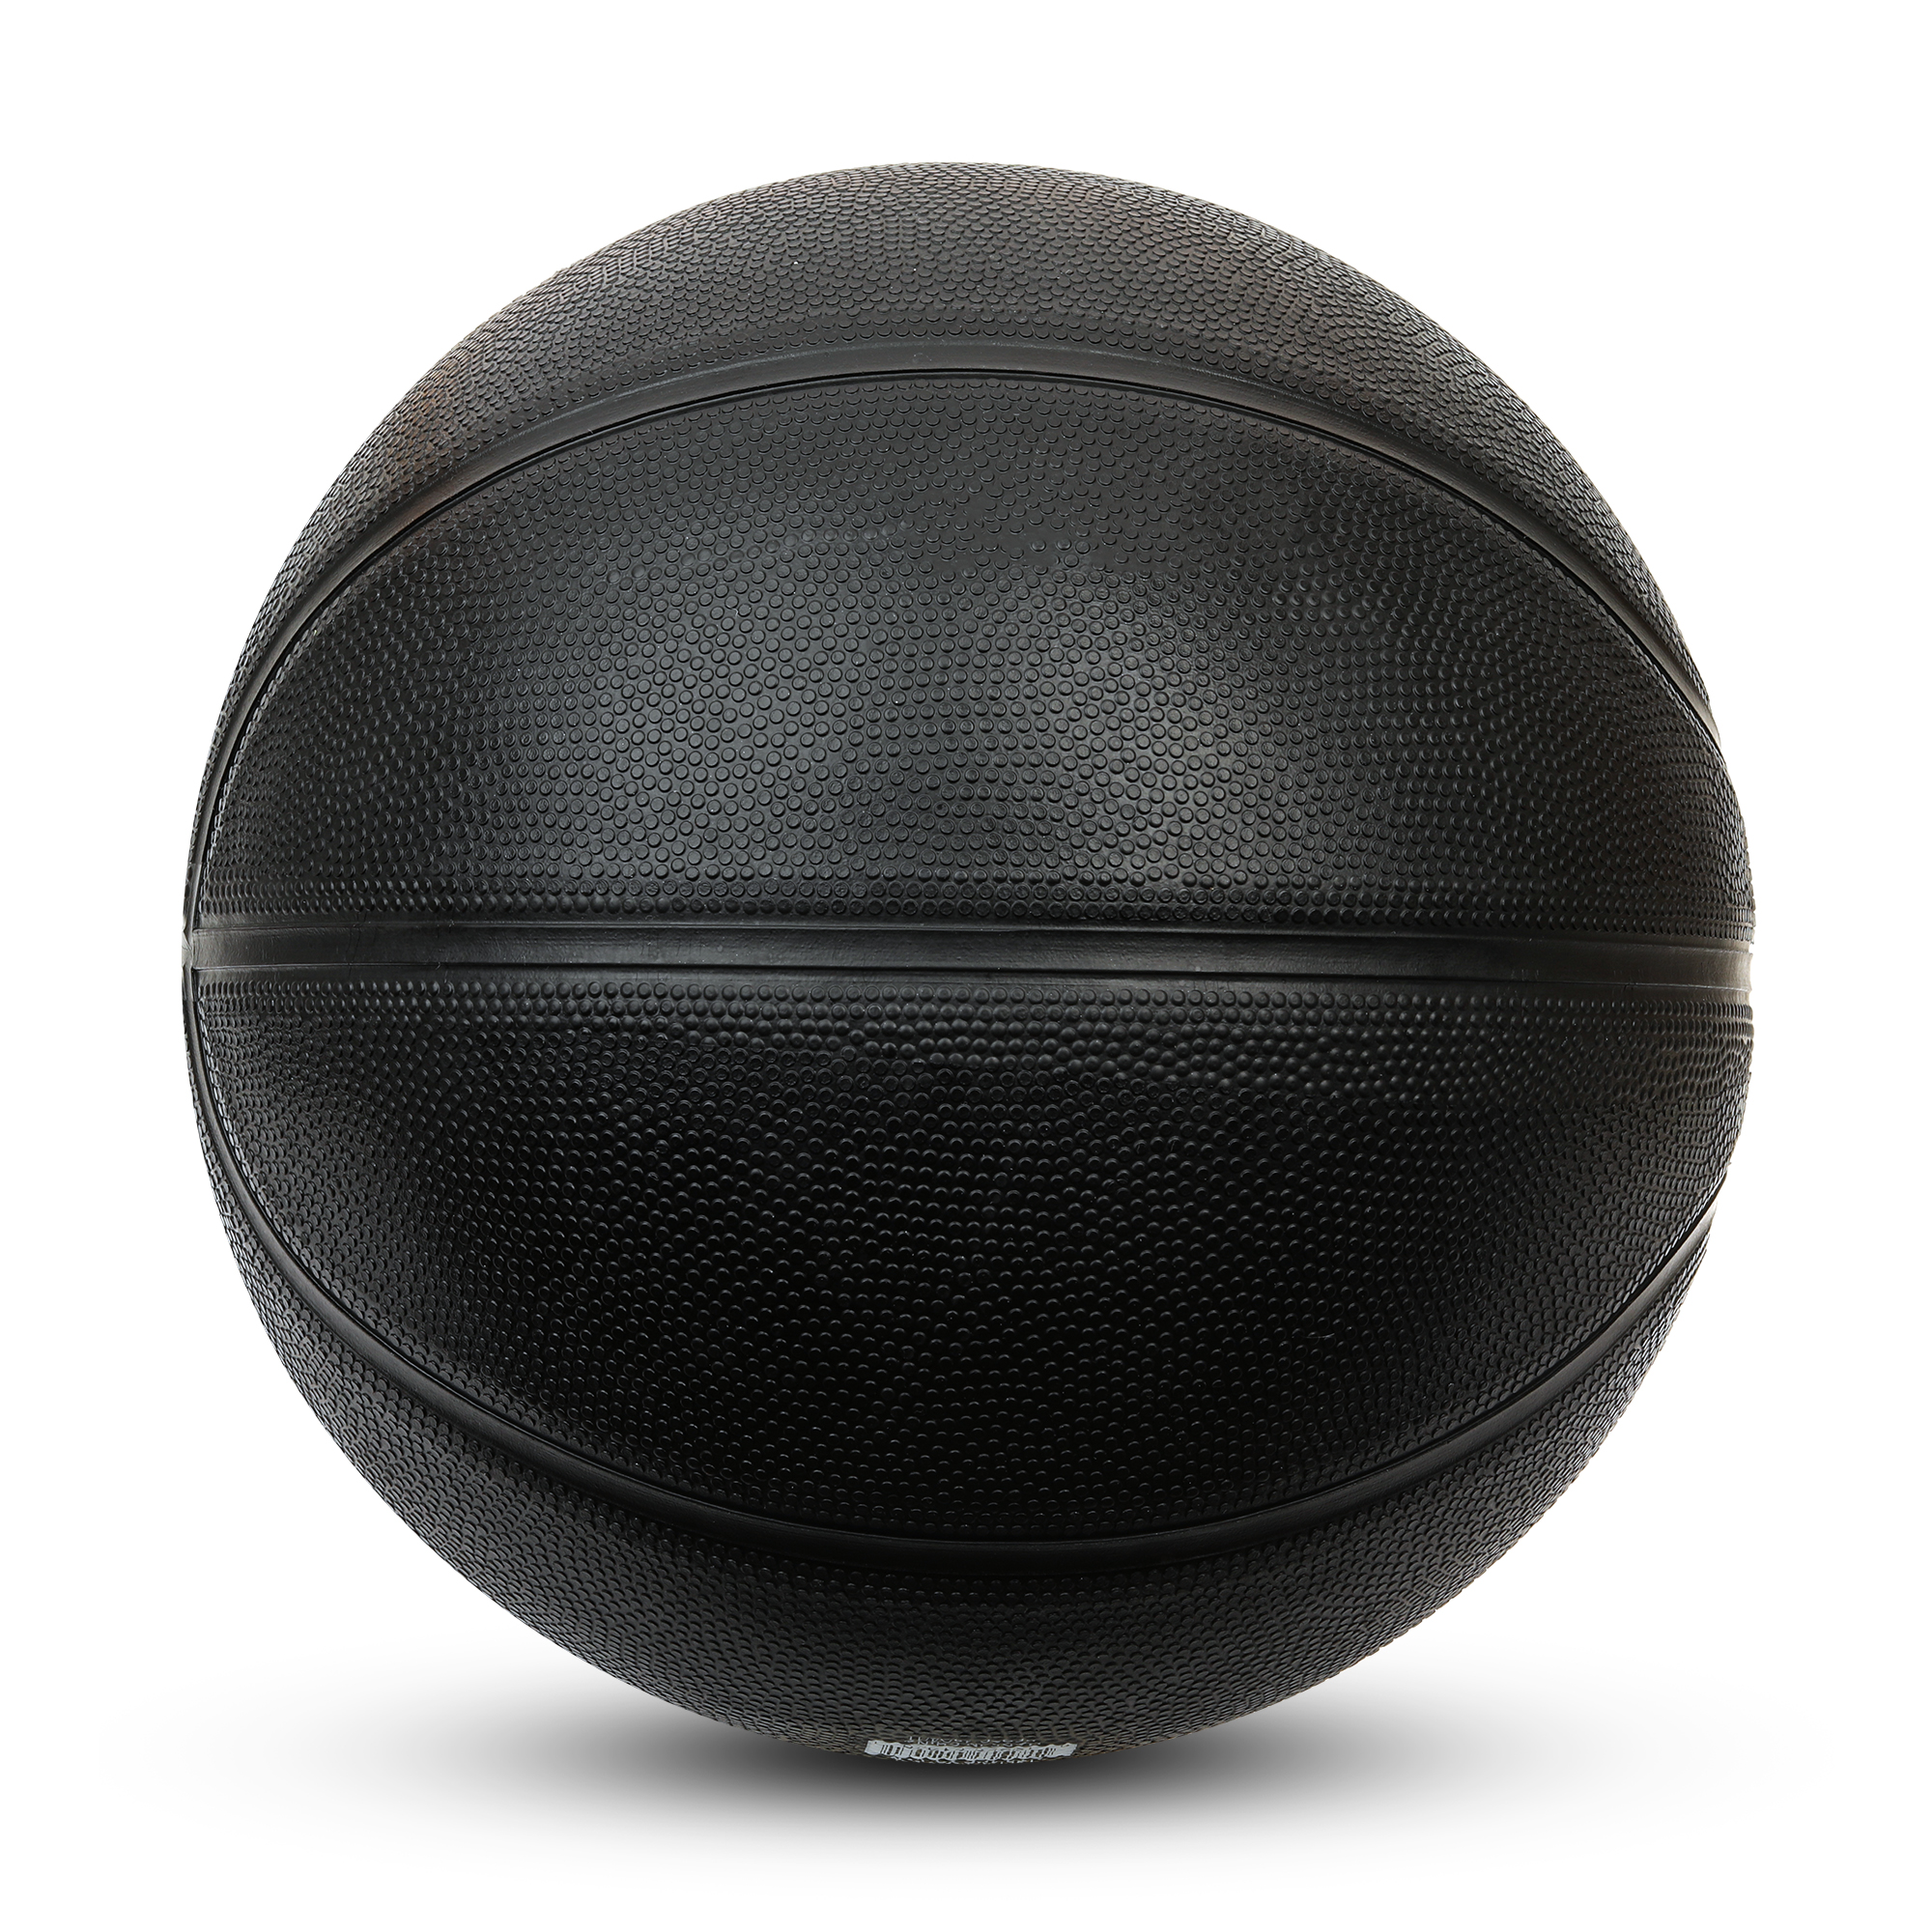 AND1 Fantom Rubber Basketball, Black, 29.5" - image 5 of 5